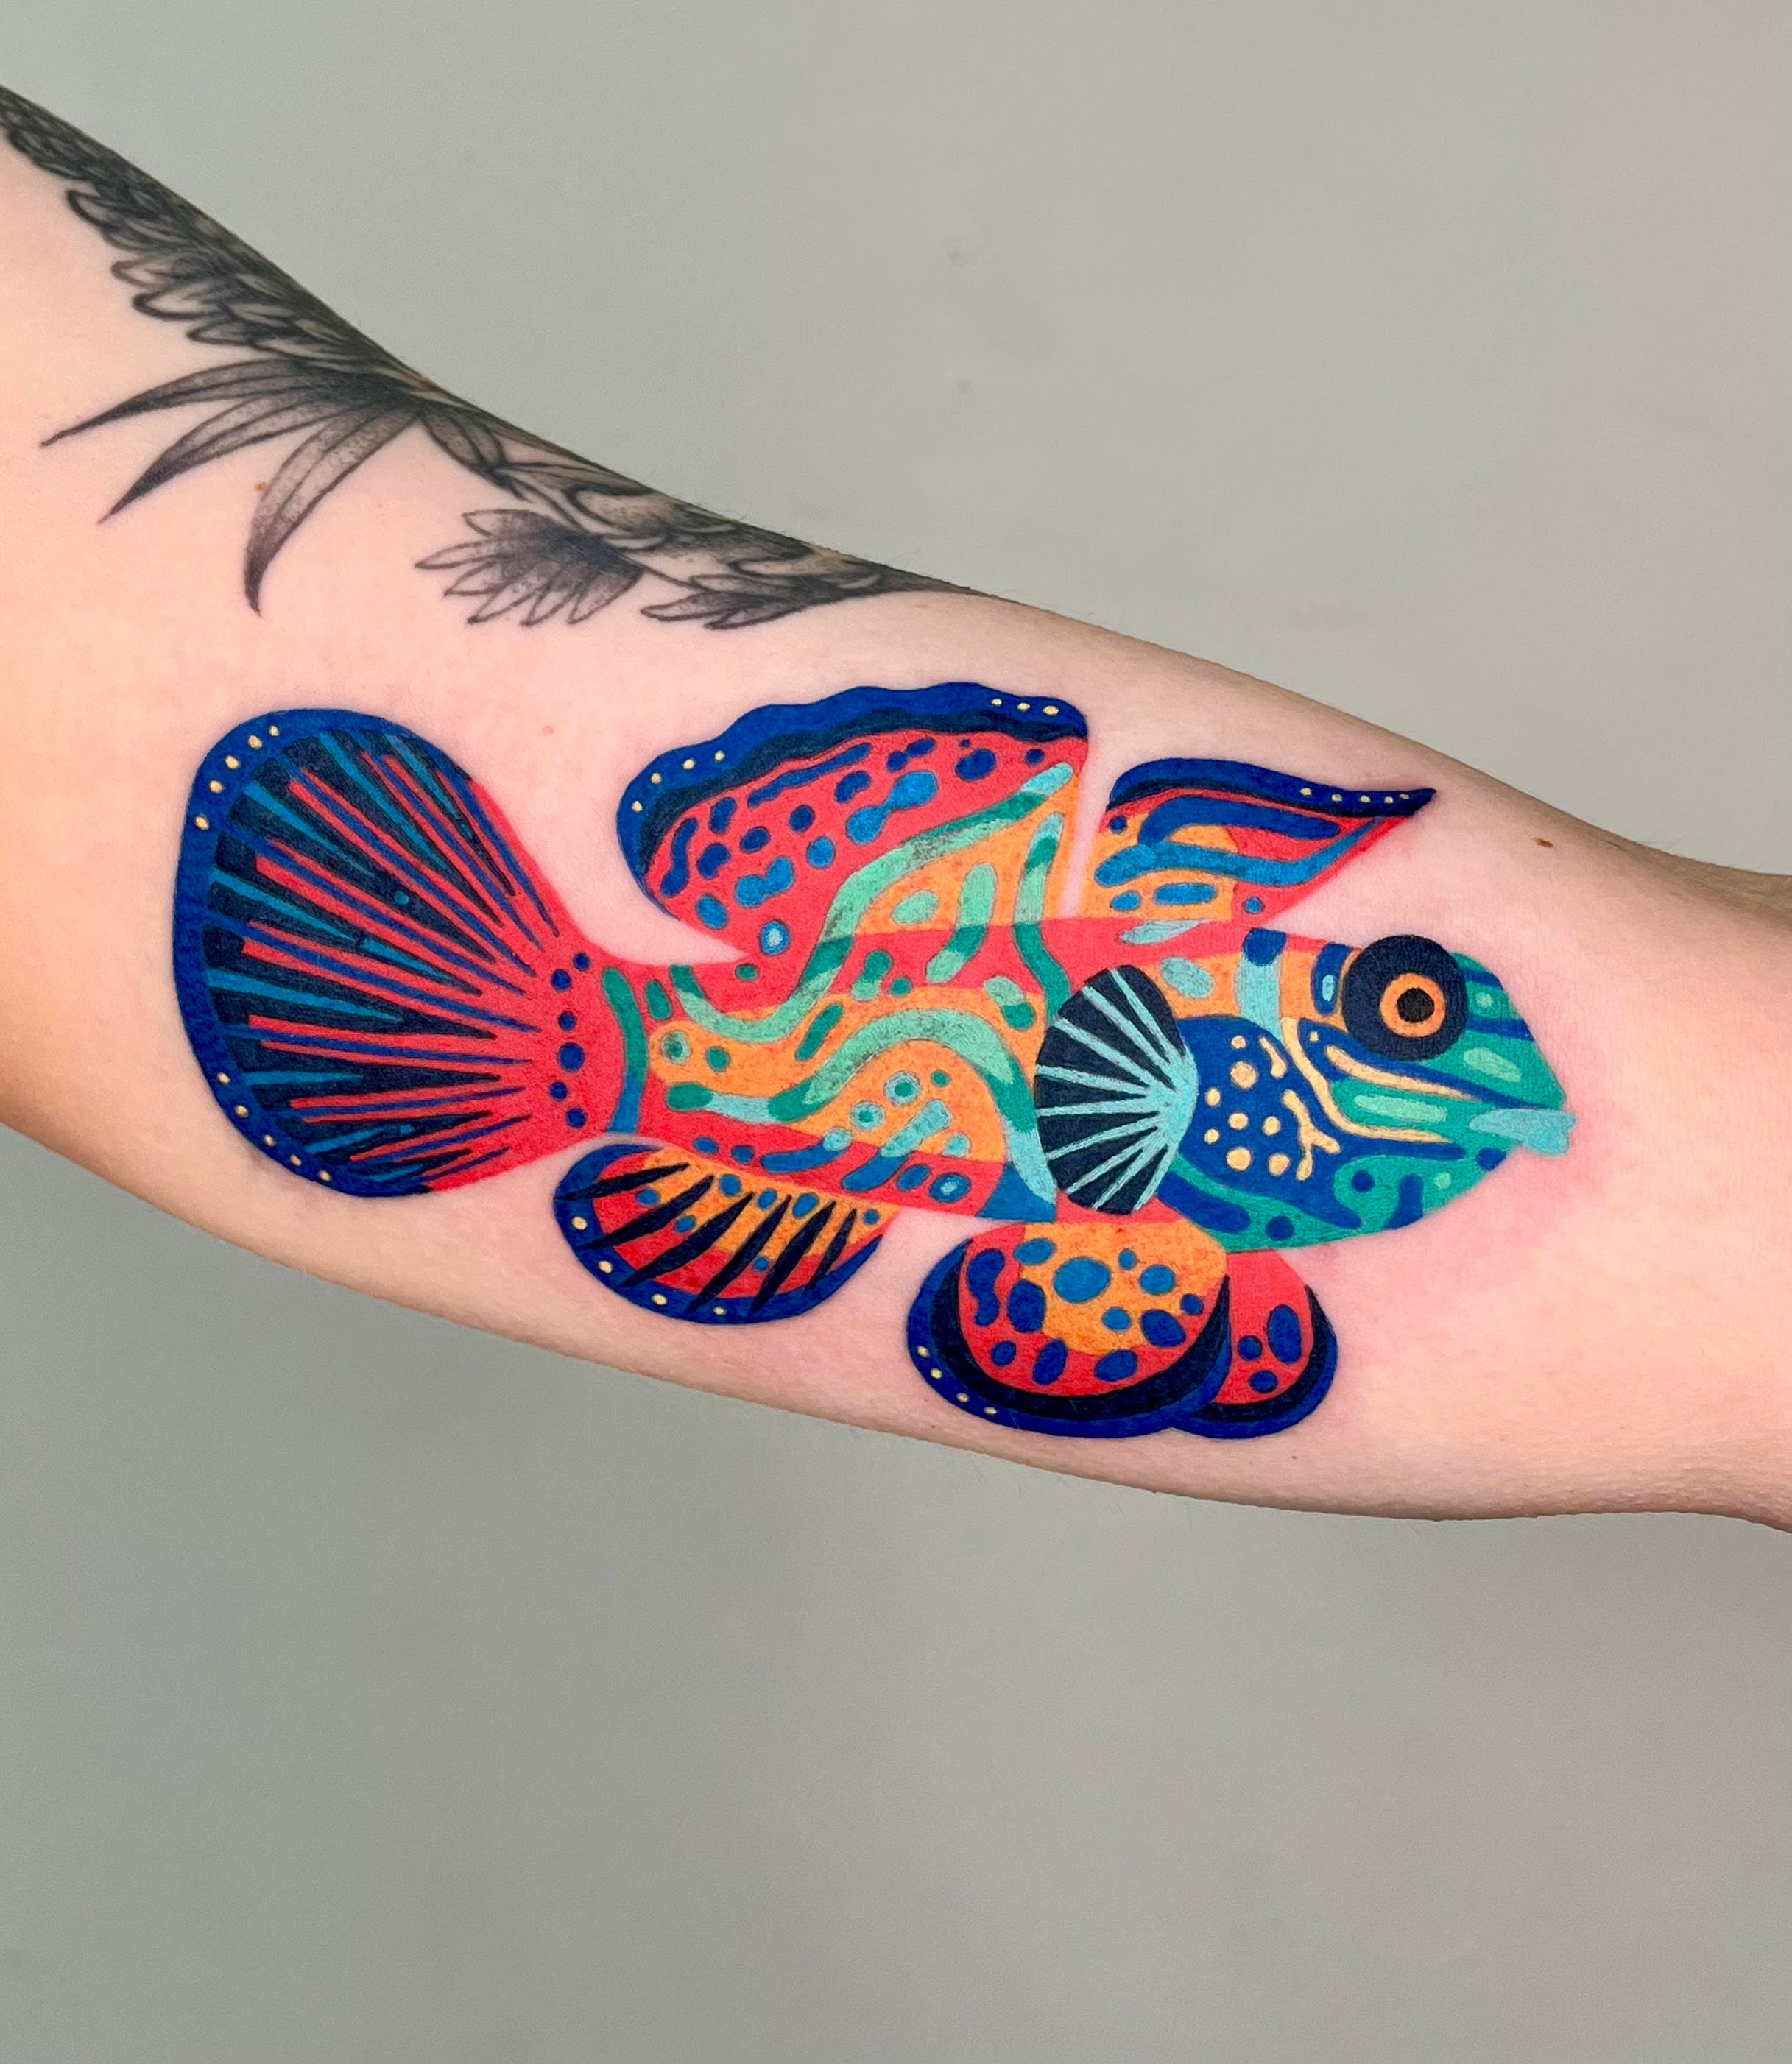 Mandarinfish colorful tattoo on arm